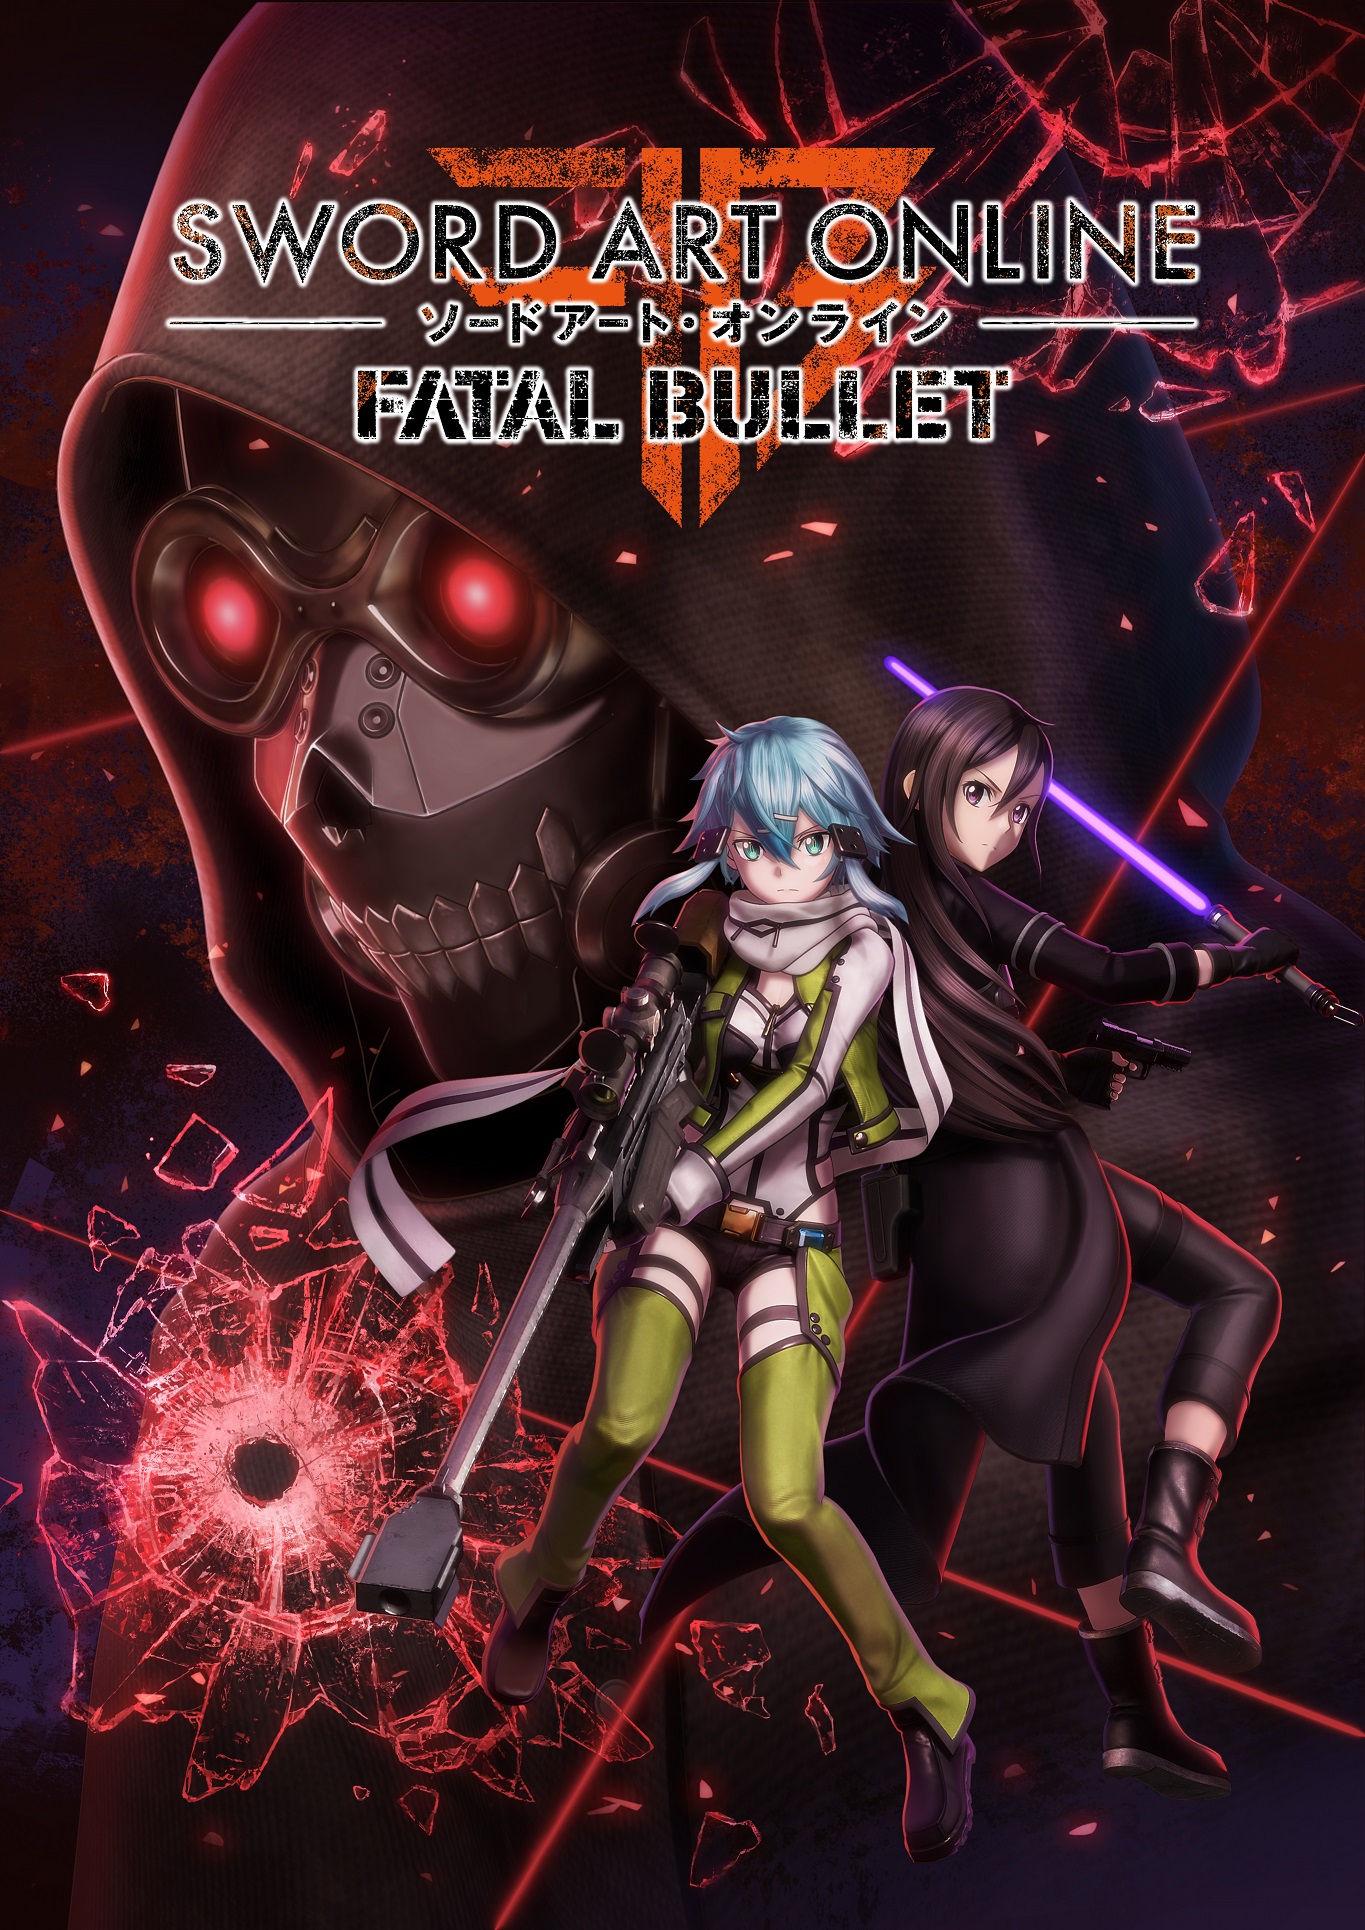 jaquette du jeu vidéo Sword Art Online: Fatal Bullet